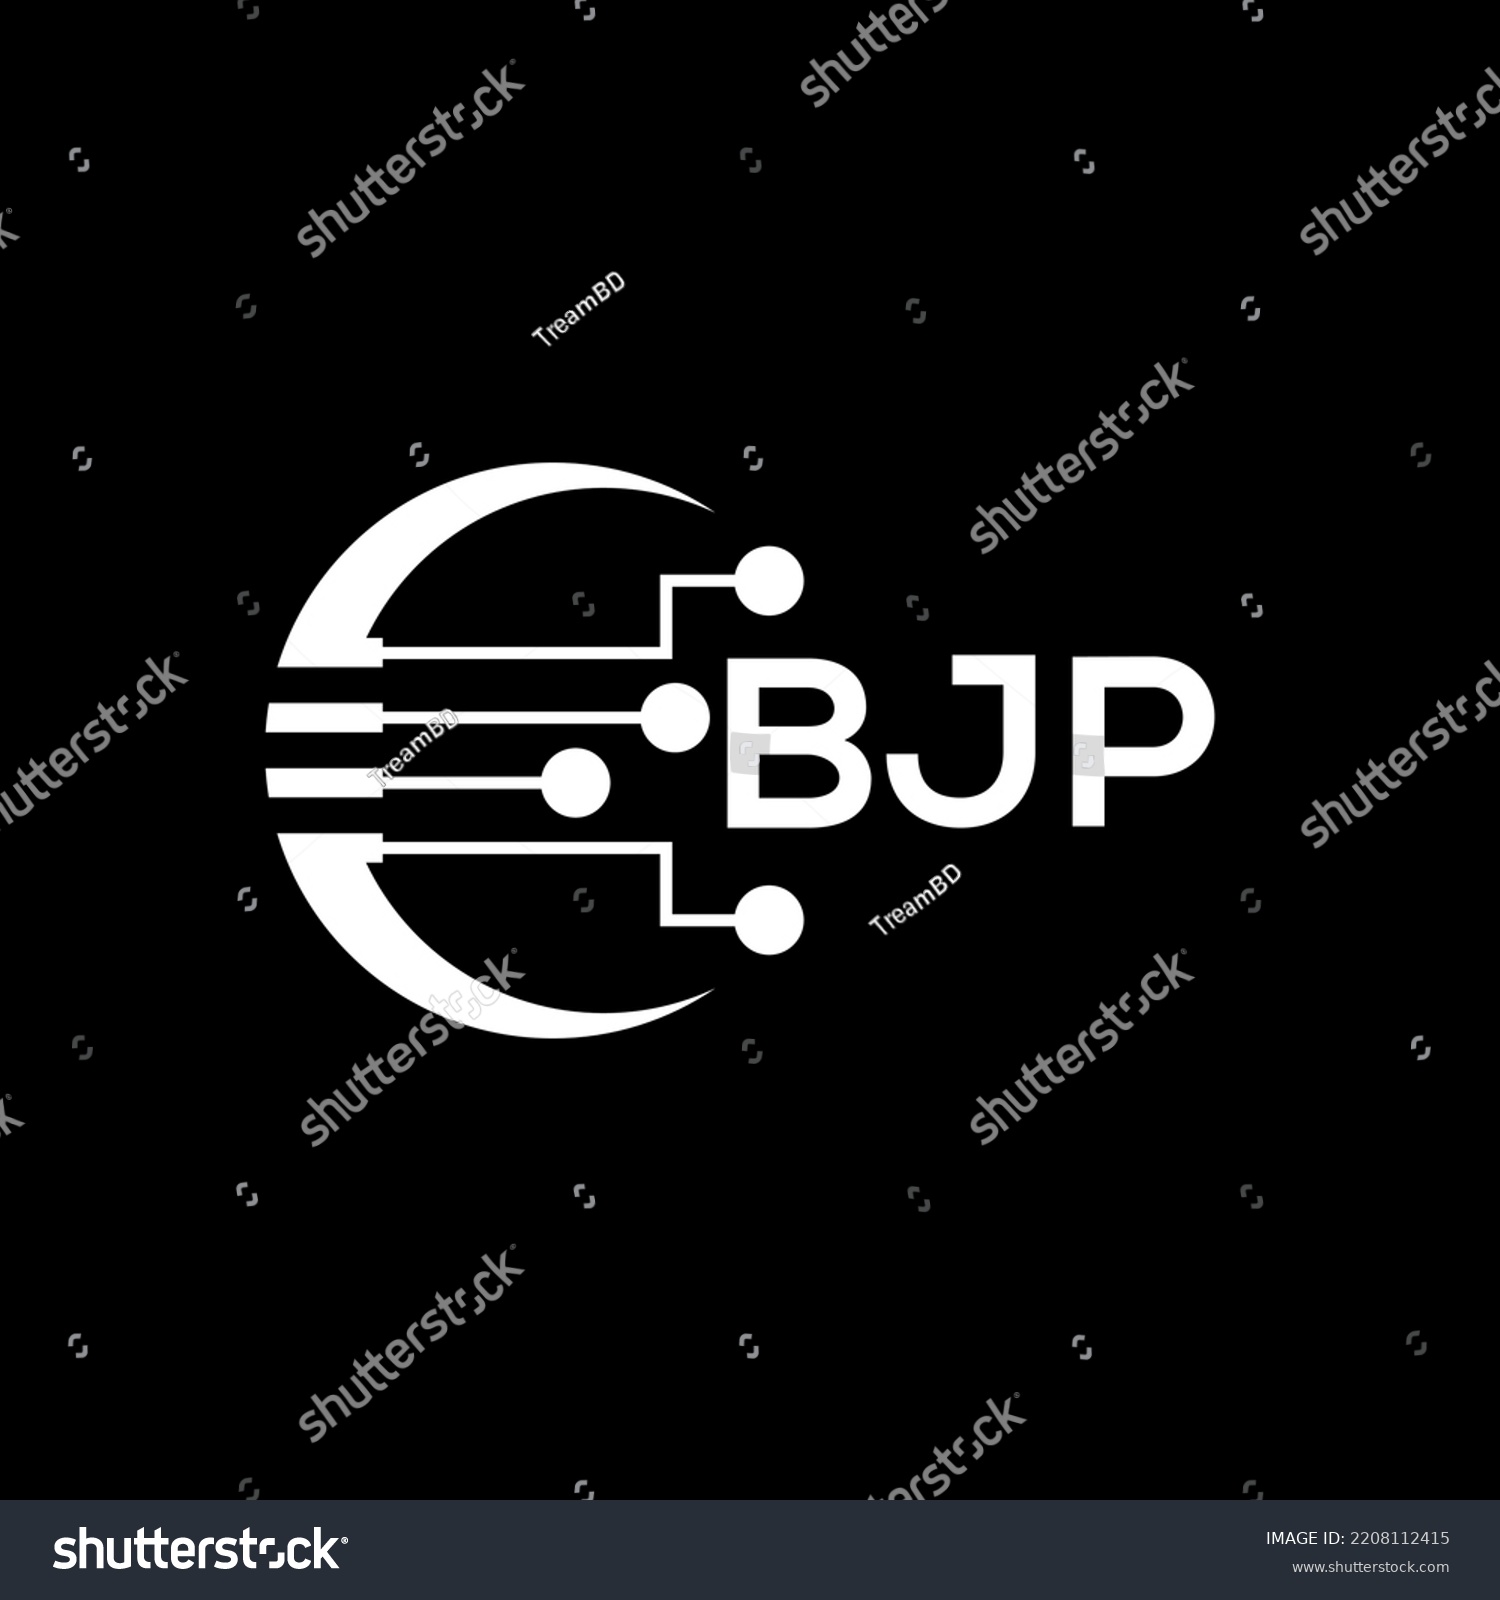 SVG of BJP Letter logo black background .BJP technology logo design vector image in illustrator .BJP letter logo design for entrepreneur and business.
 svg